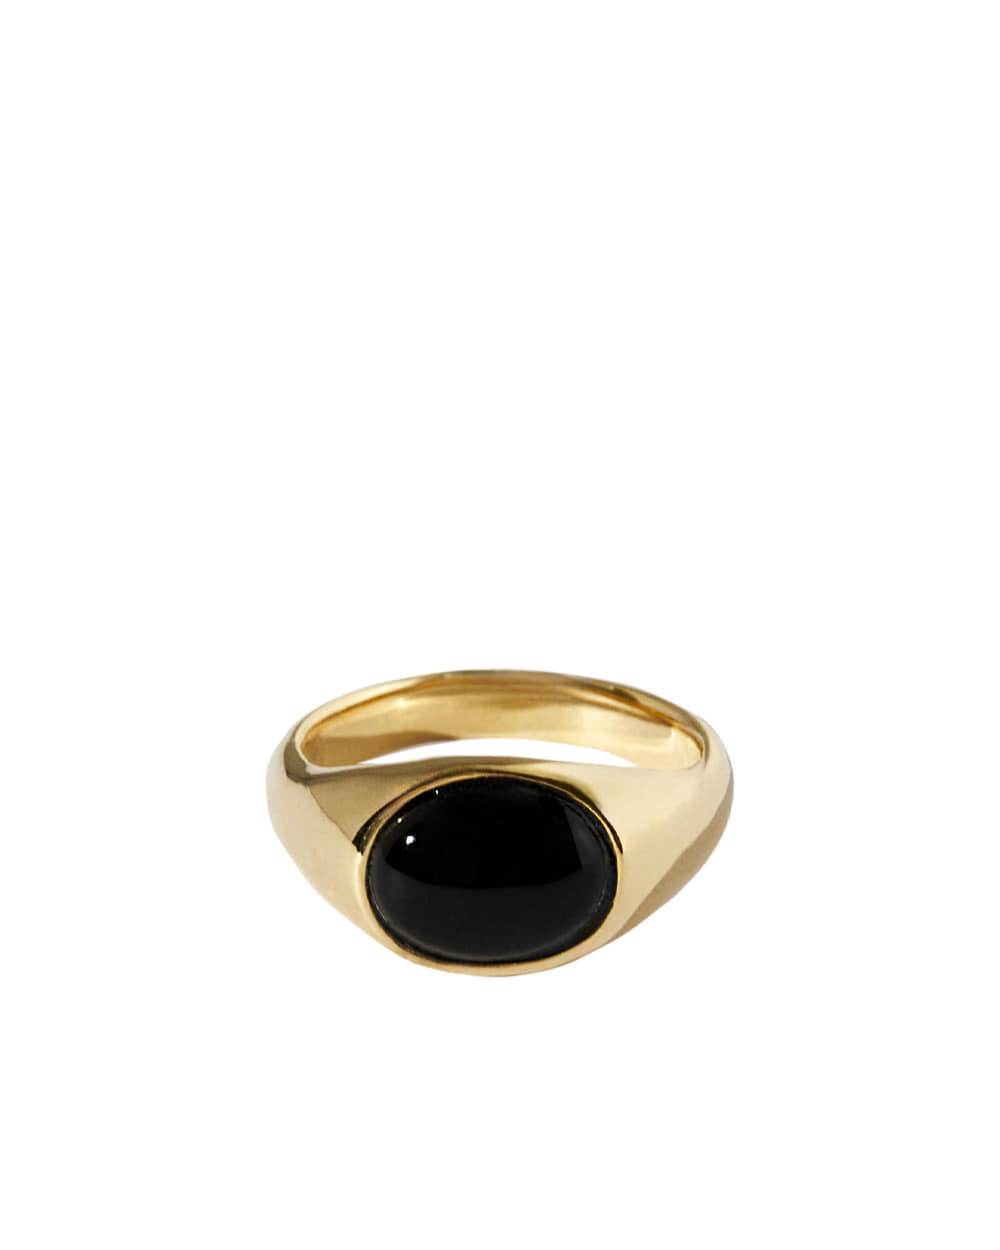 Noel gemstone ring / Gold